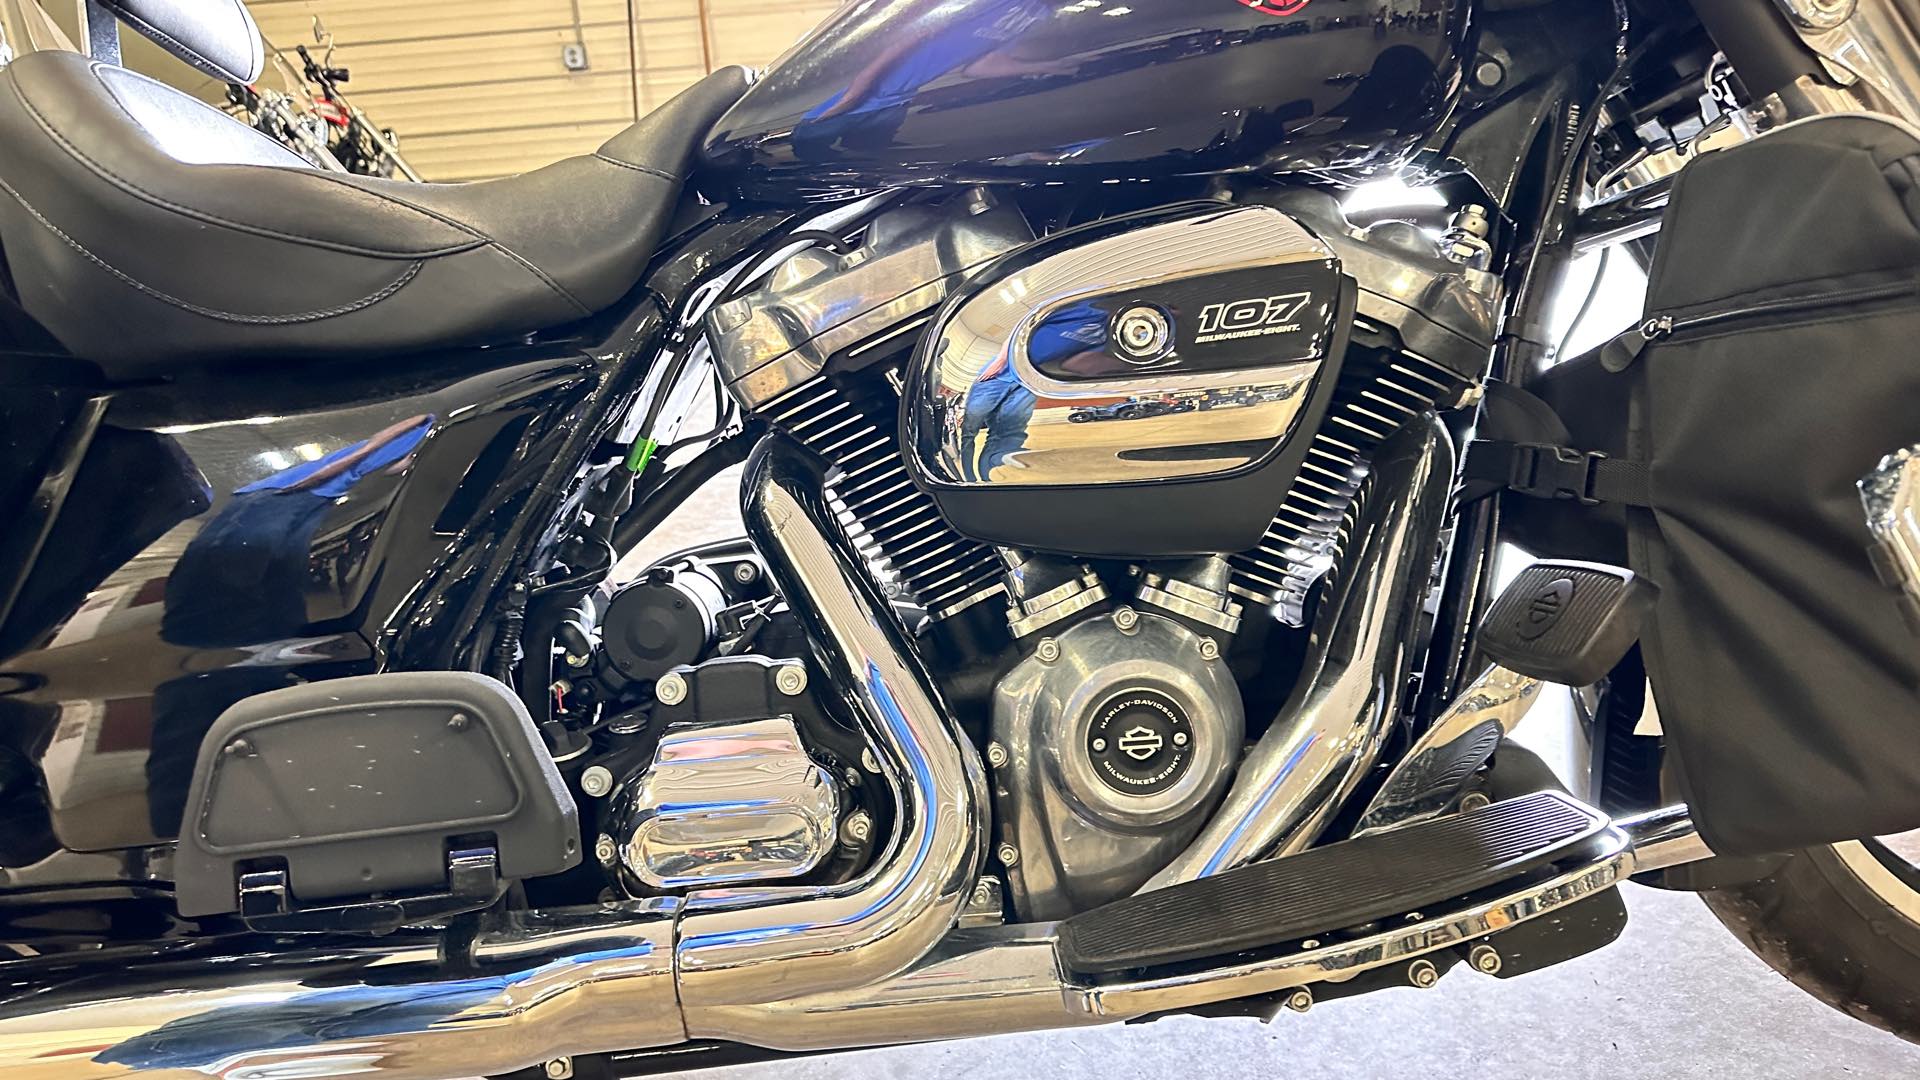 2019 Harley-Davidson Electra Glide Standard at Southern Illinois Motorsports